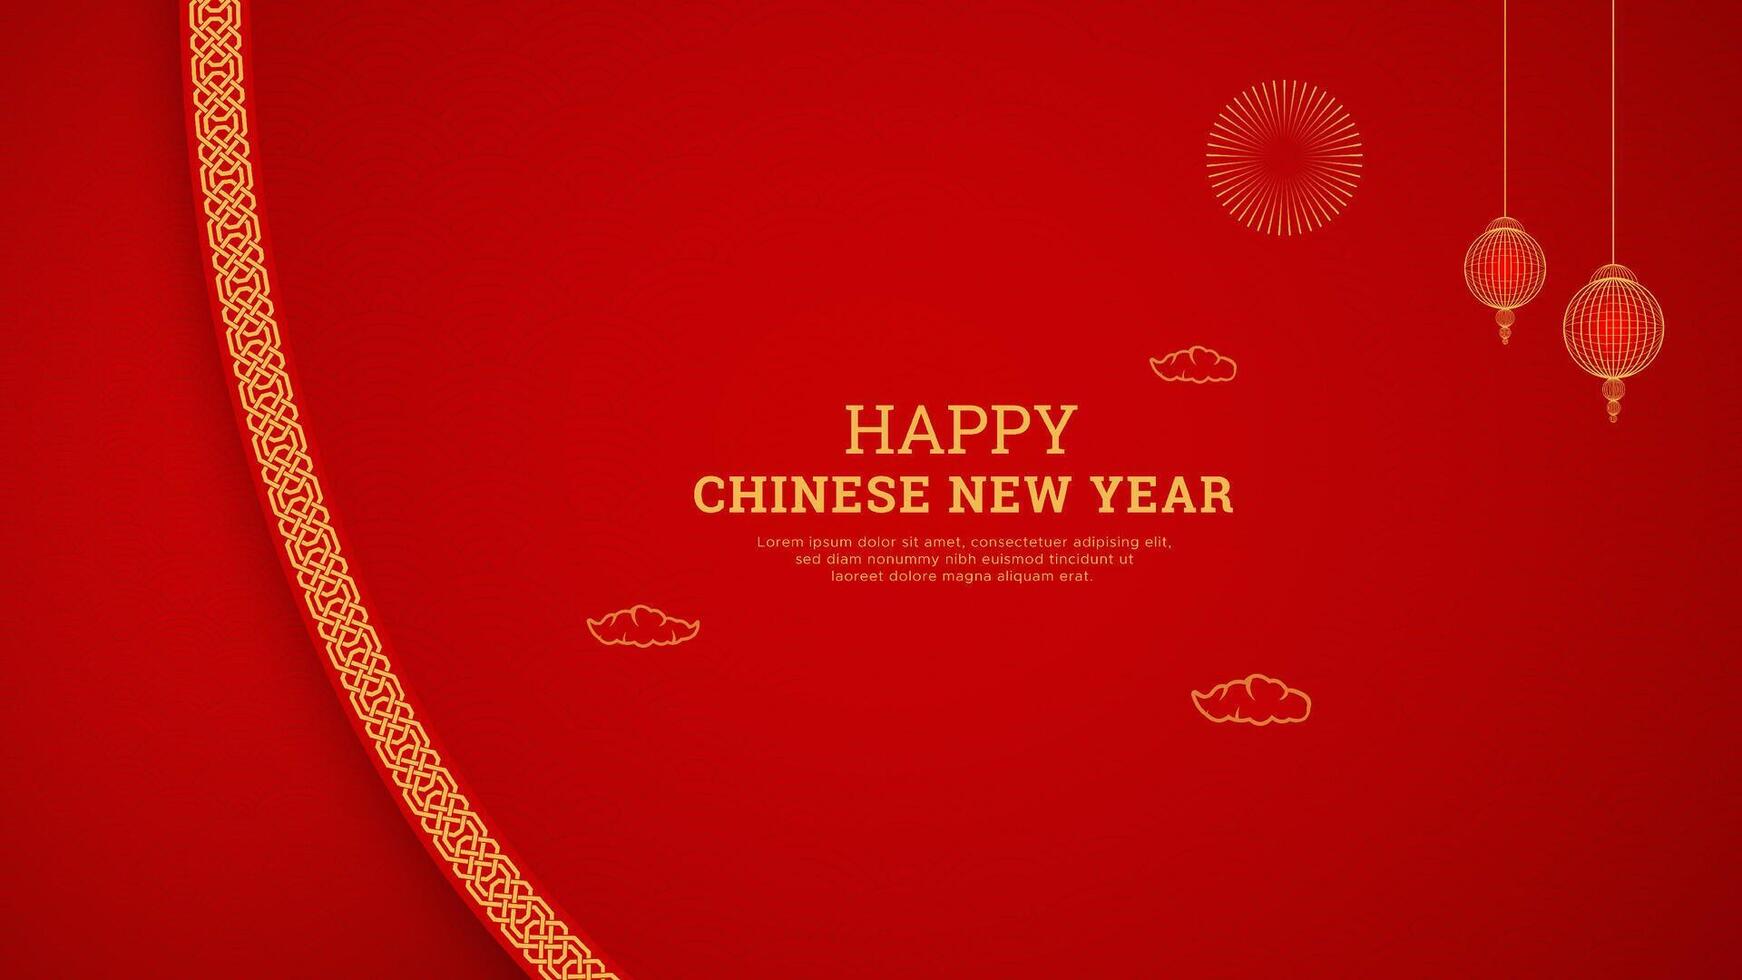 gelukkig Chinese nieuw jaar rood achtergrond ontwerp met Chinese grens patroon en lantaarns vector